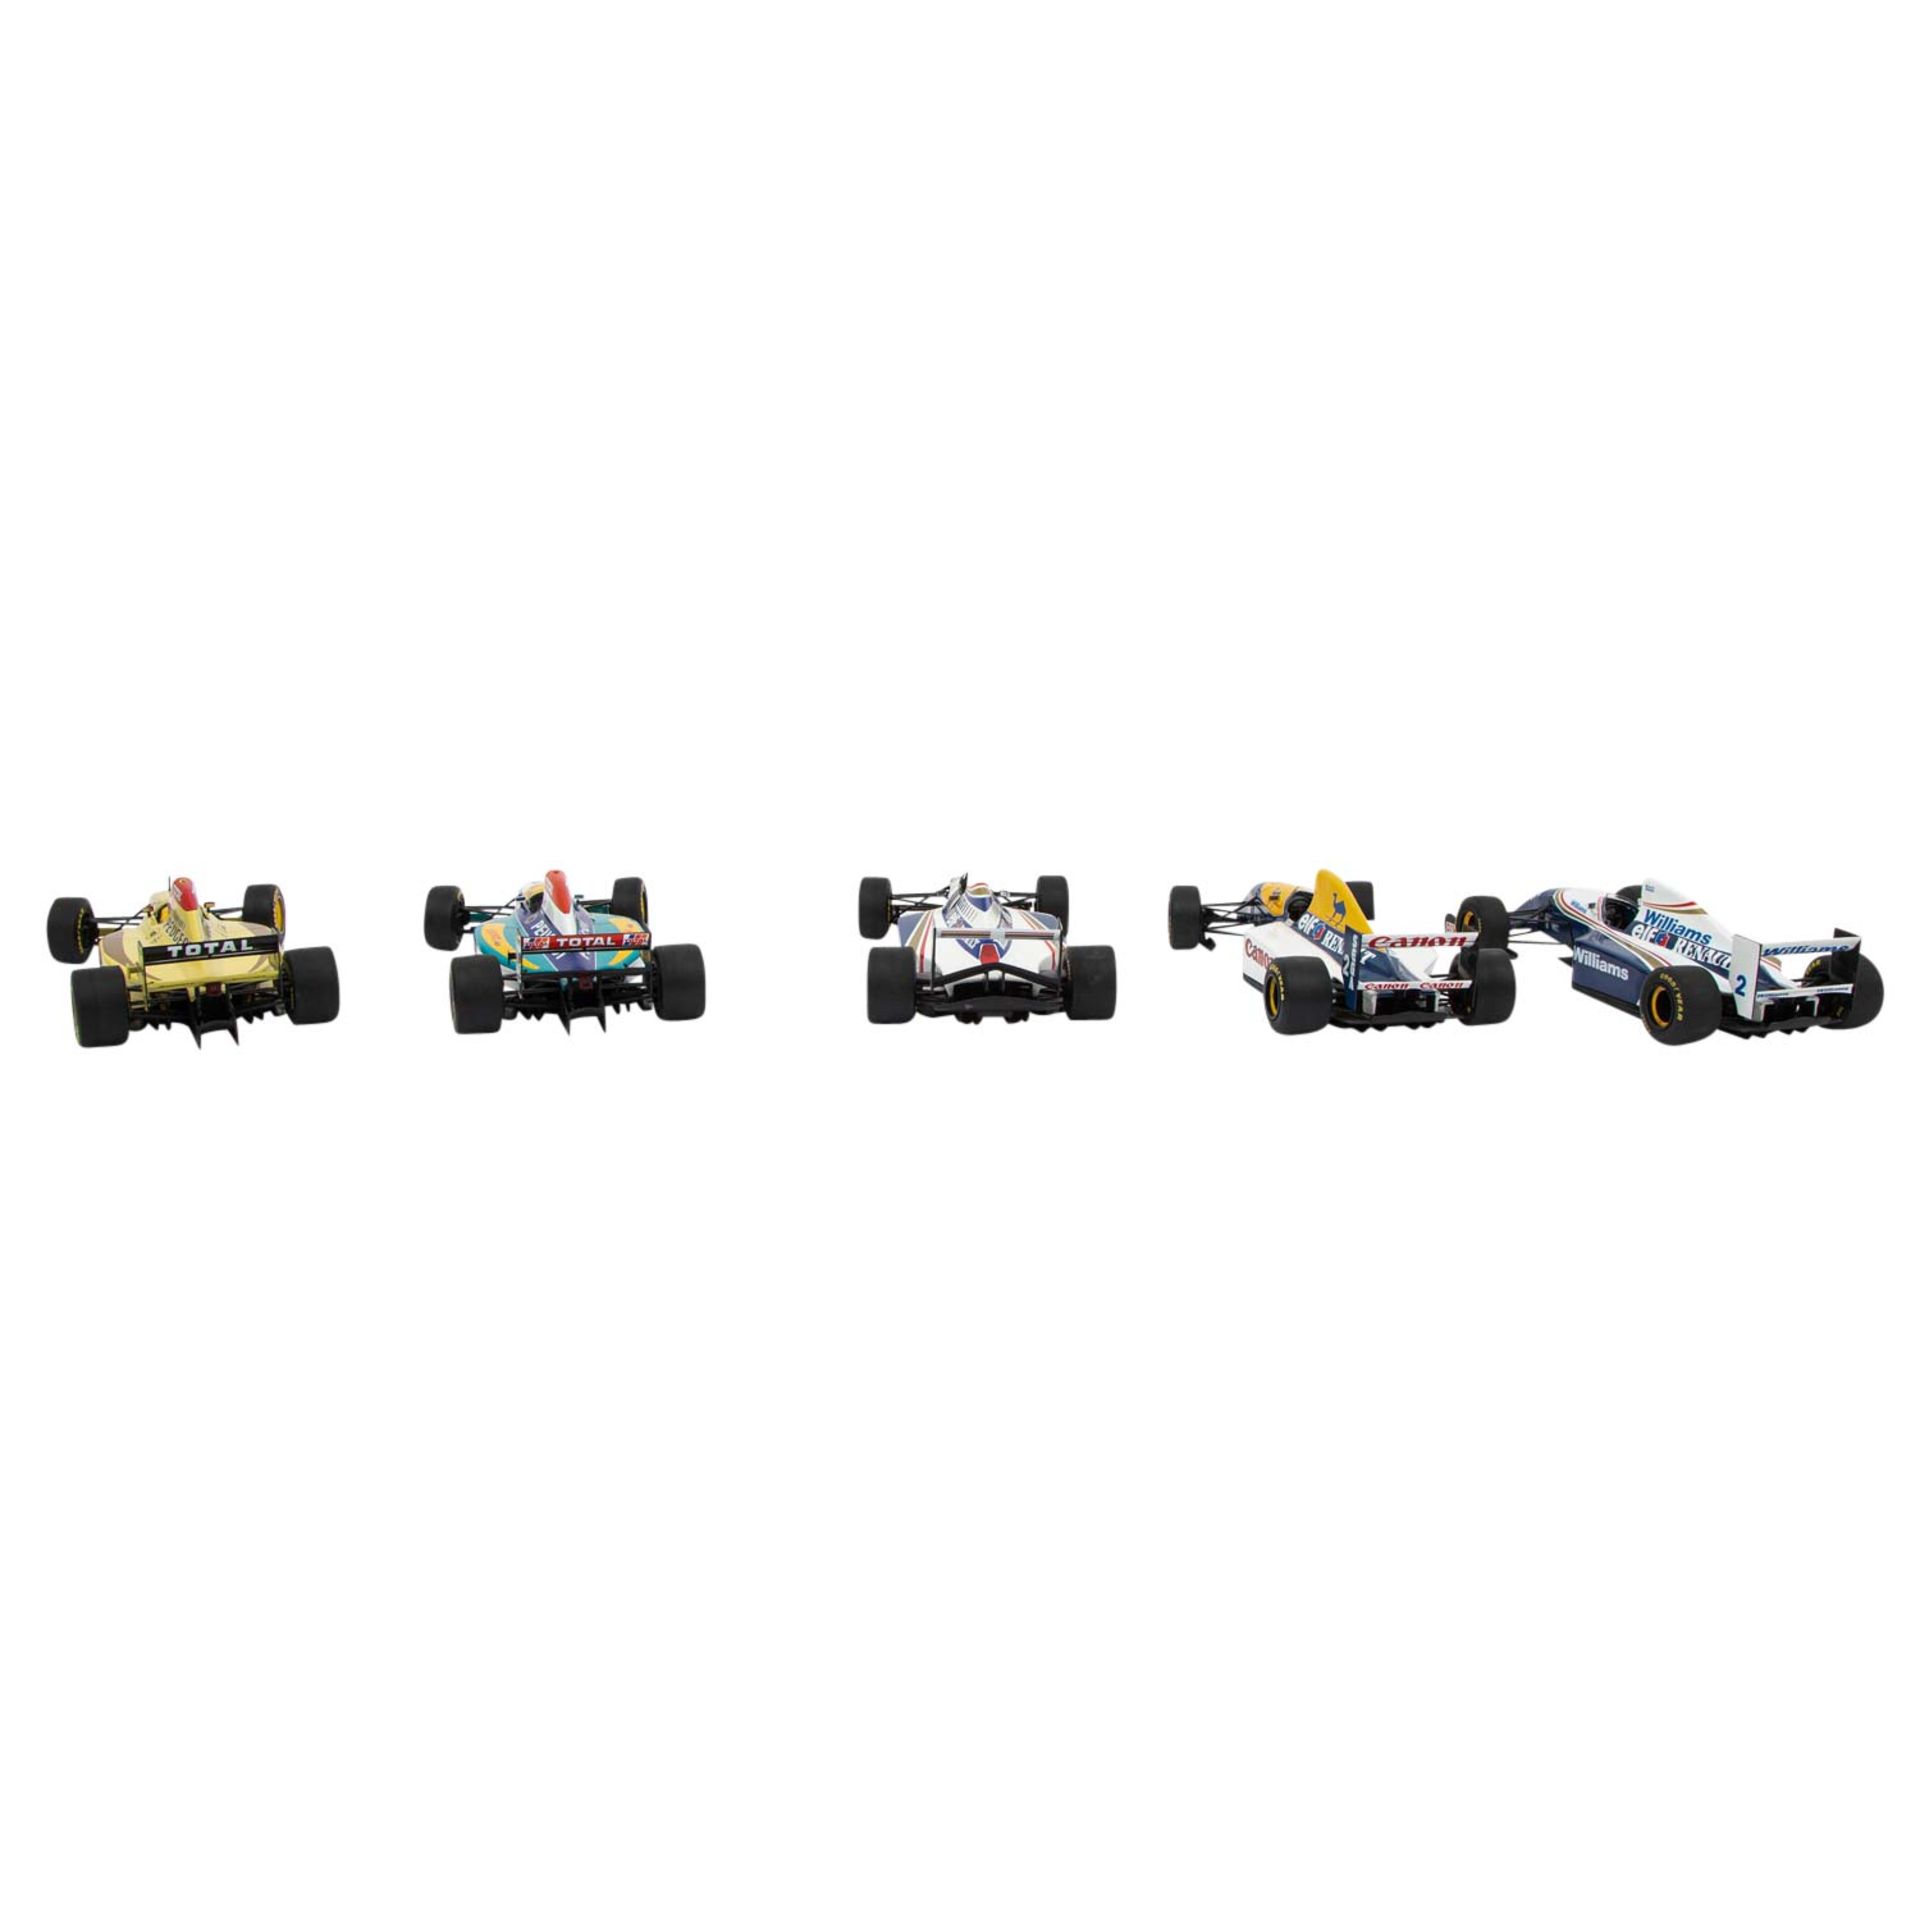 MINICHAMPS (Paul's Model Art) Konvolut aus 5 Formel 1 Rennfahrzeugen im Maßstab 1:18, - Image 2 of 7